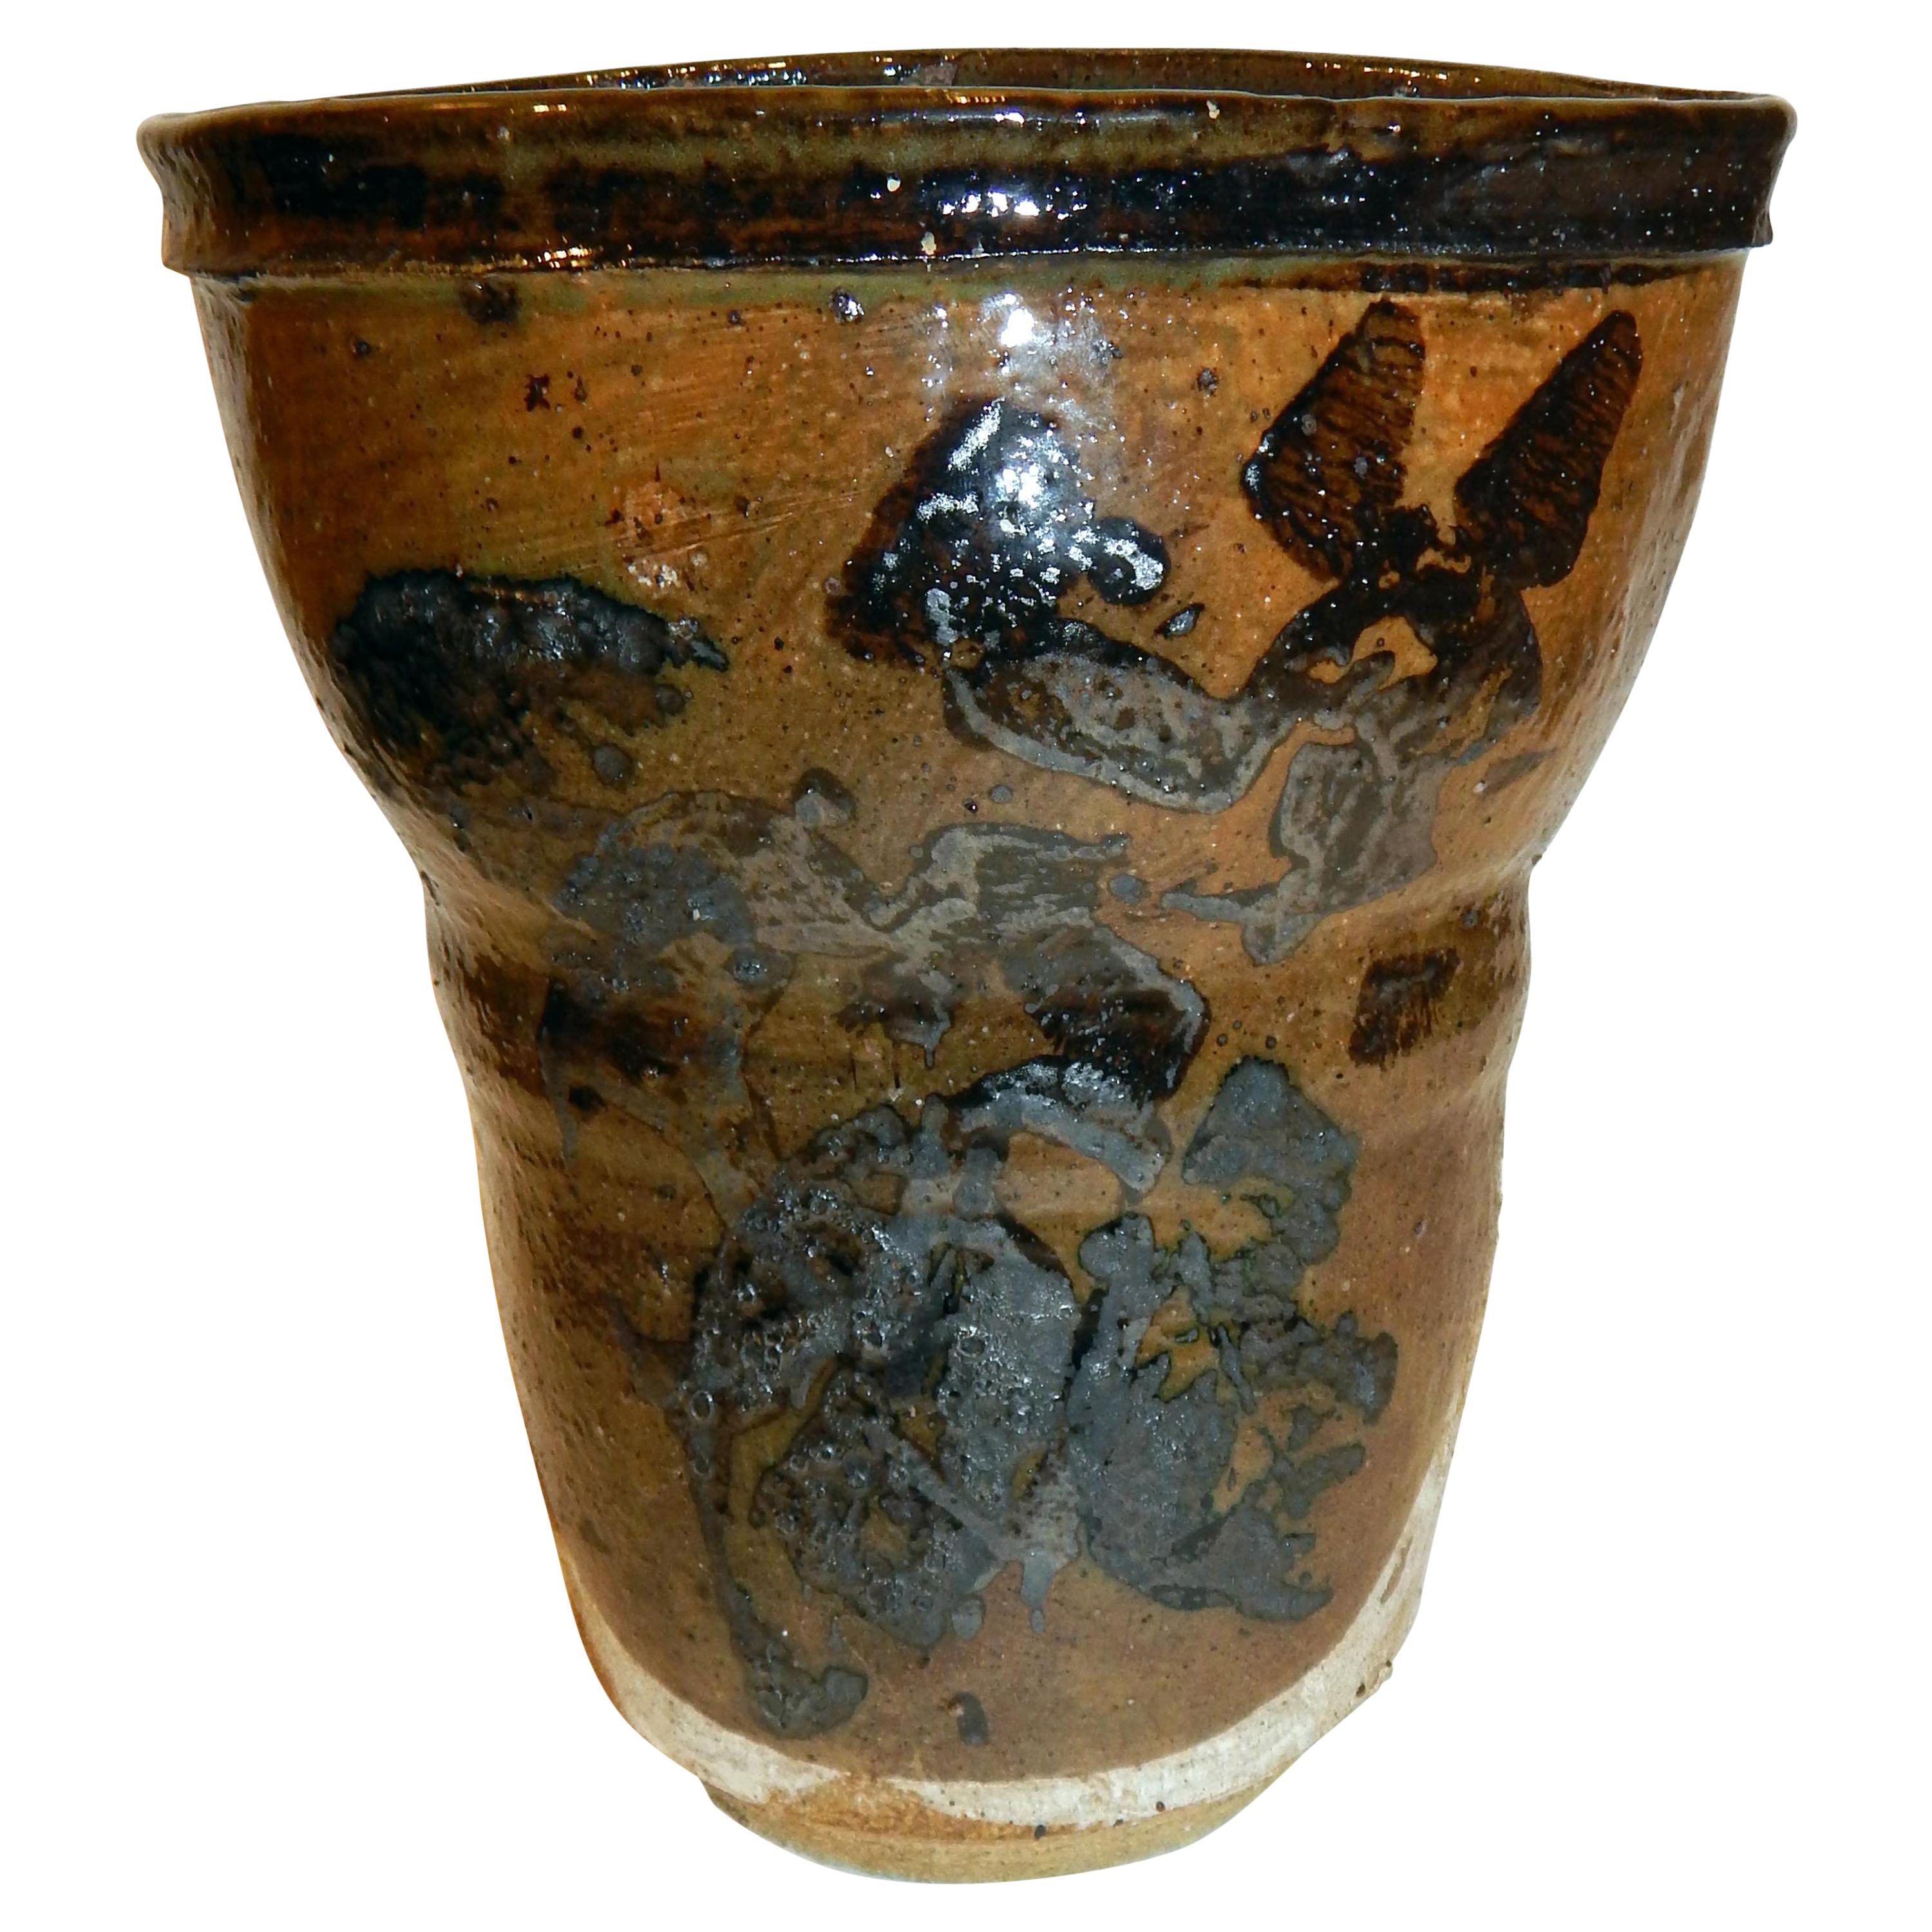 Paul Soldner Abstract Expressionist Studio Ceramic Vase